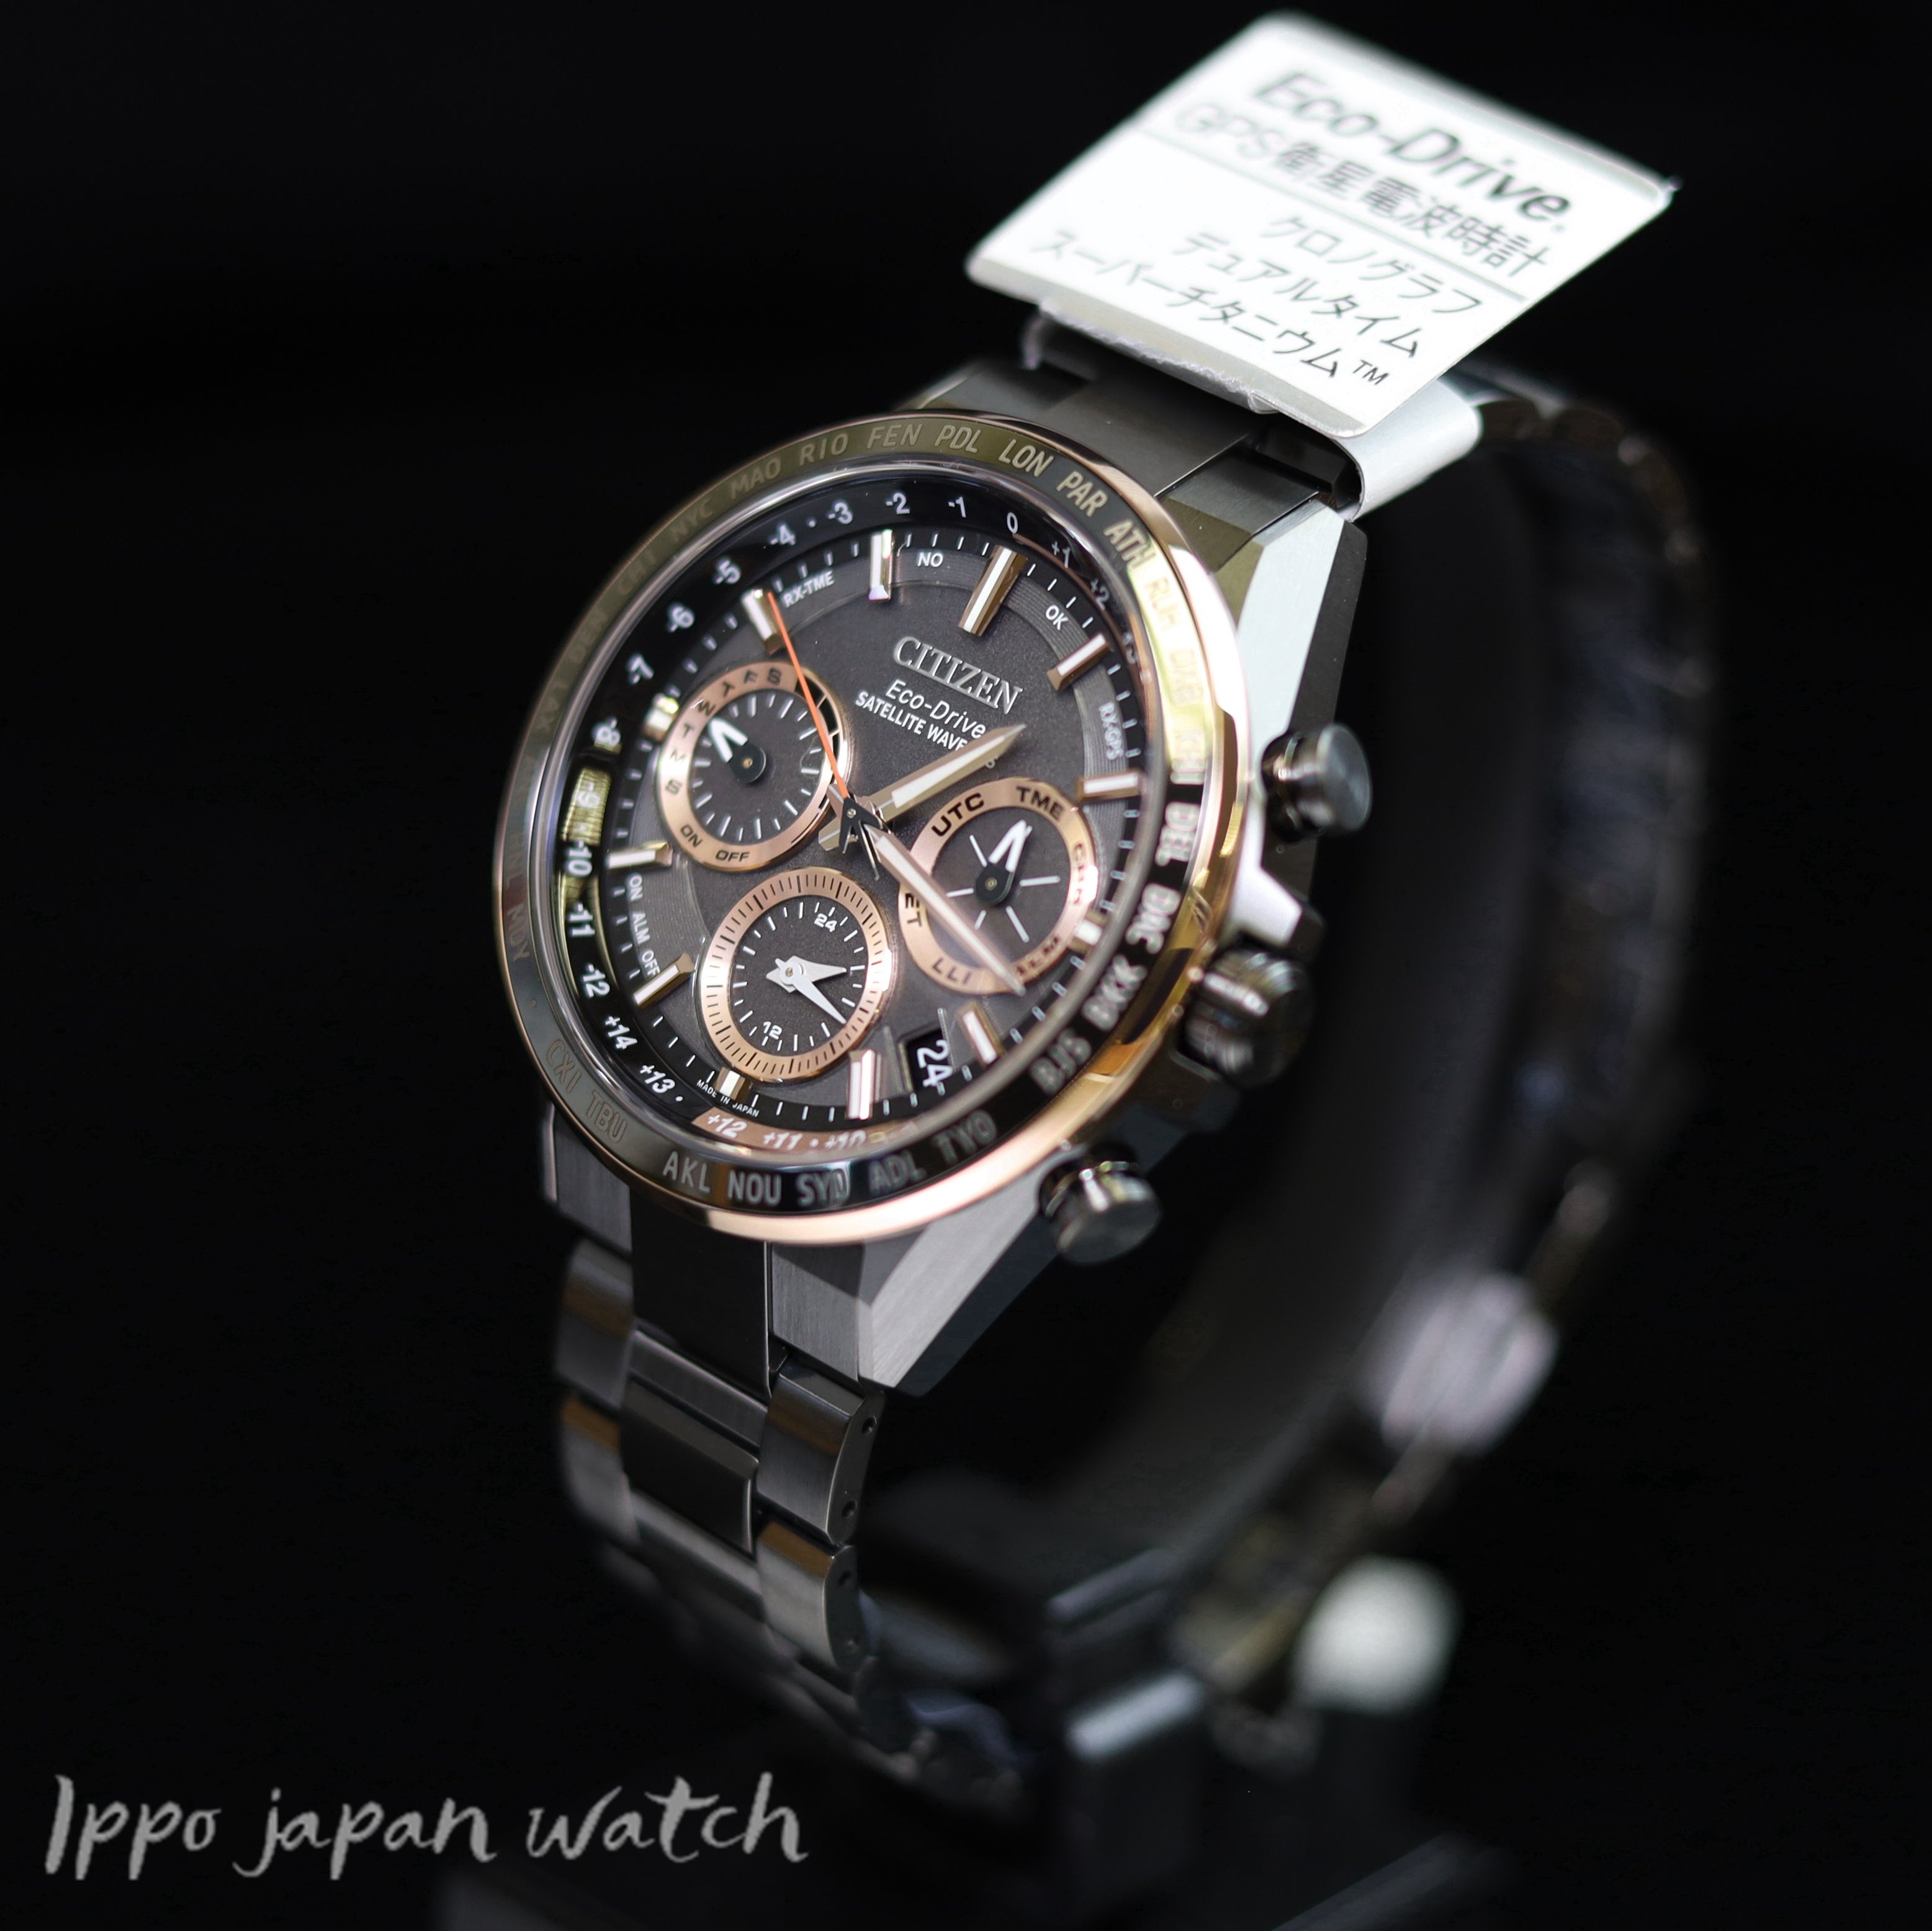 Citizen ATTESA ACT Line Double Direct Flight CC4016-67E Men's watch - IPPO JAPAN WATCH 